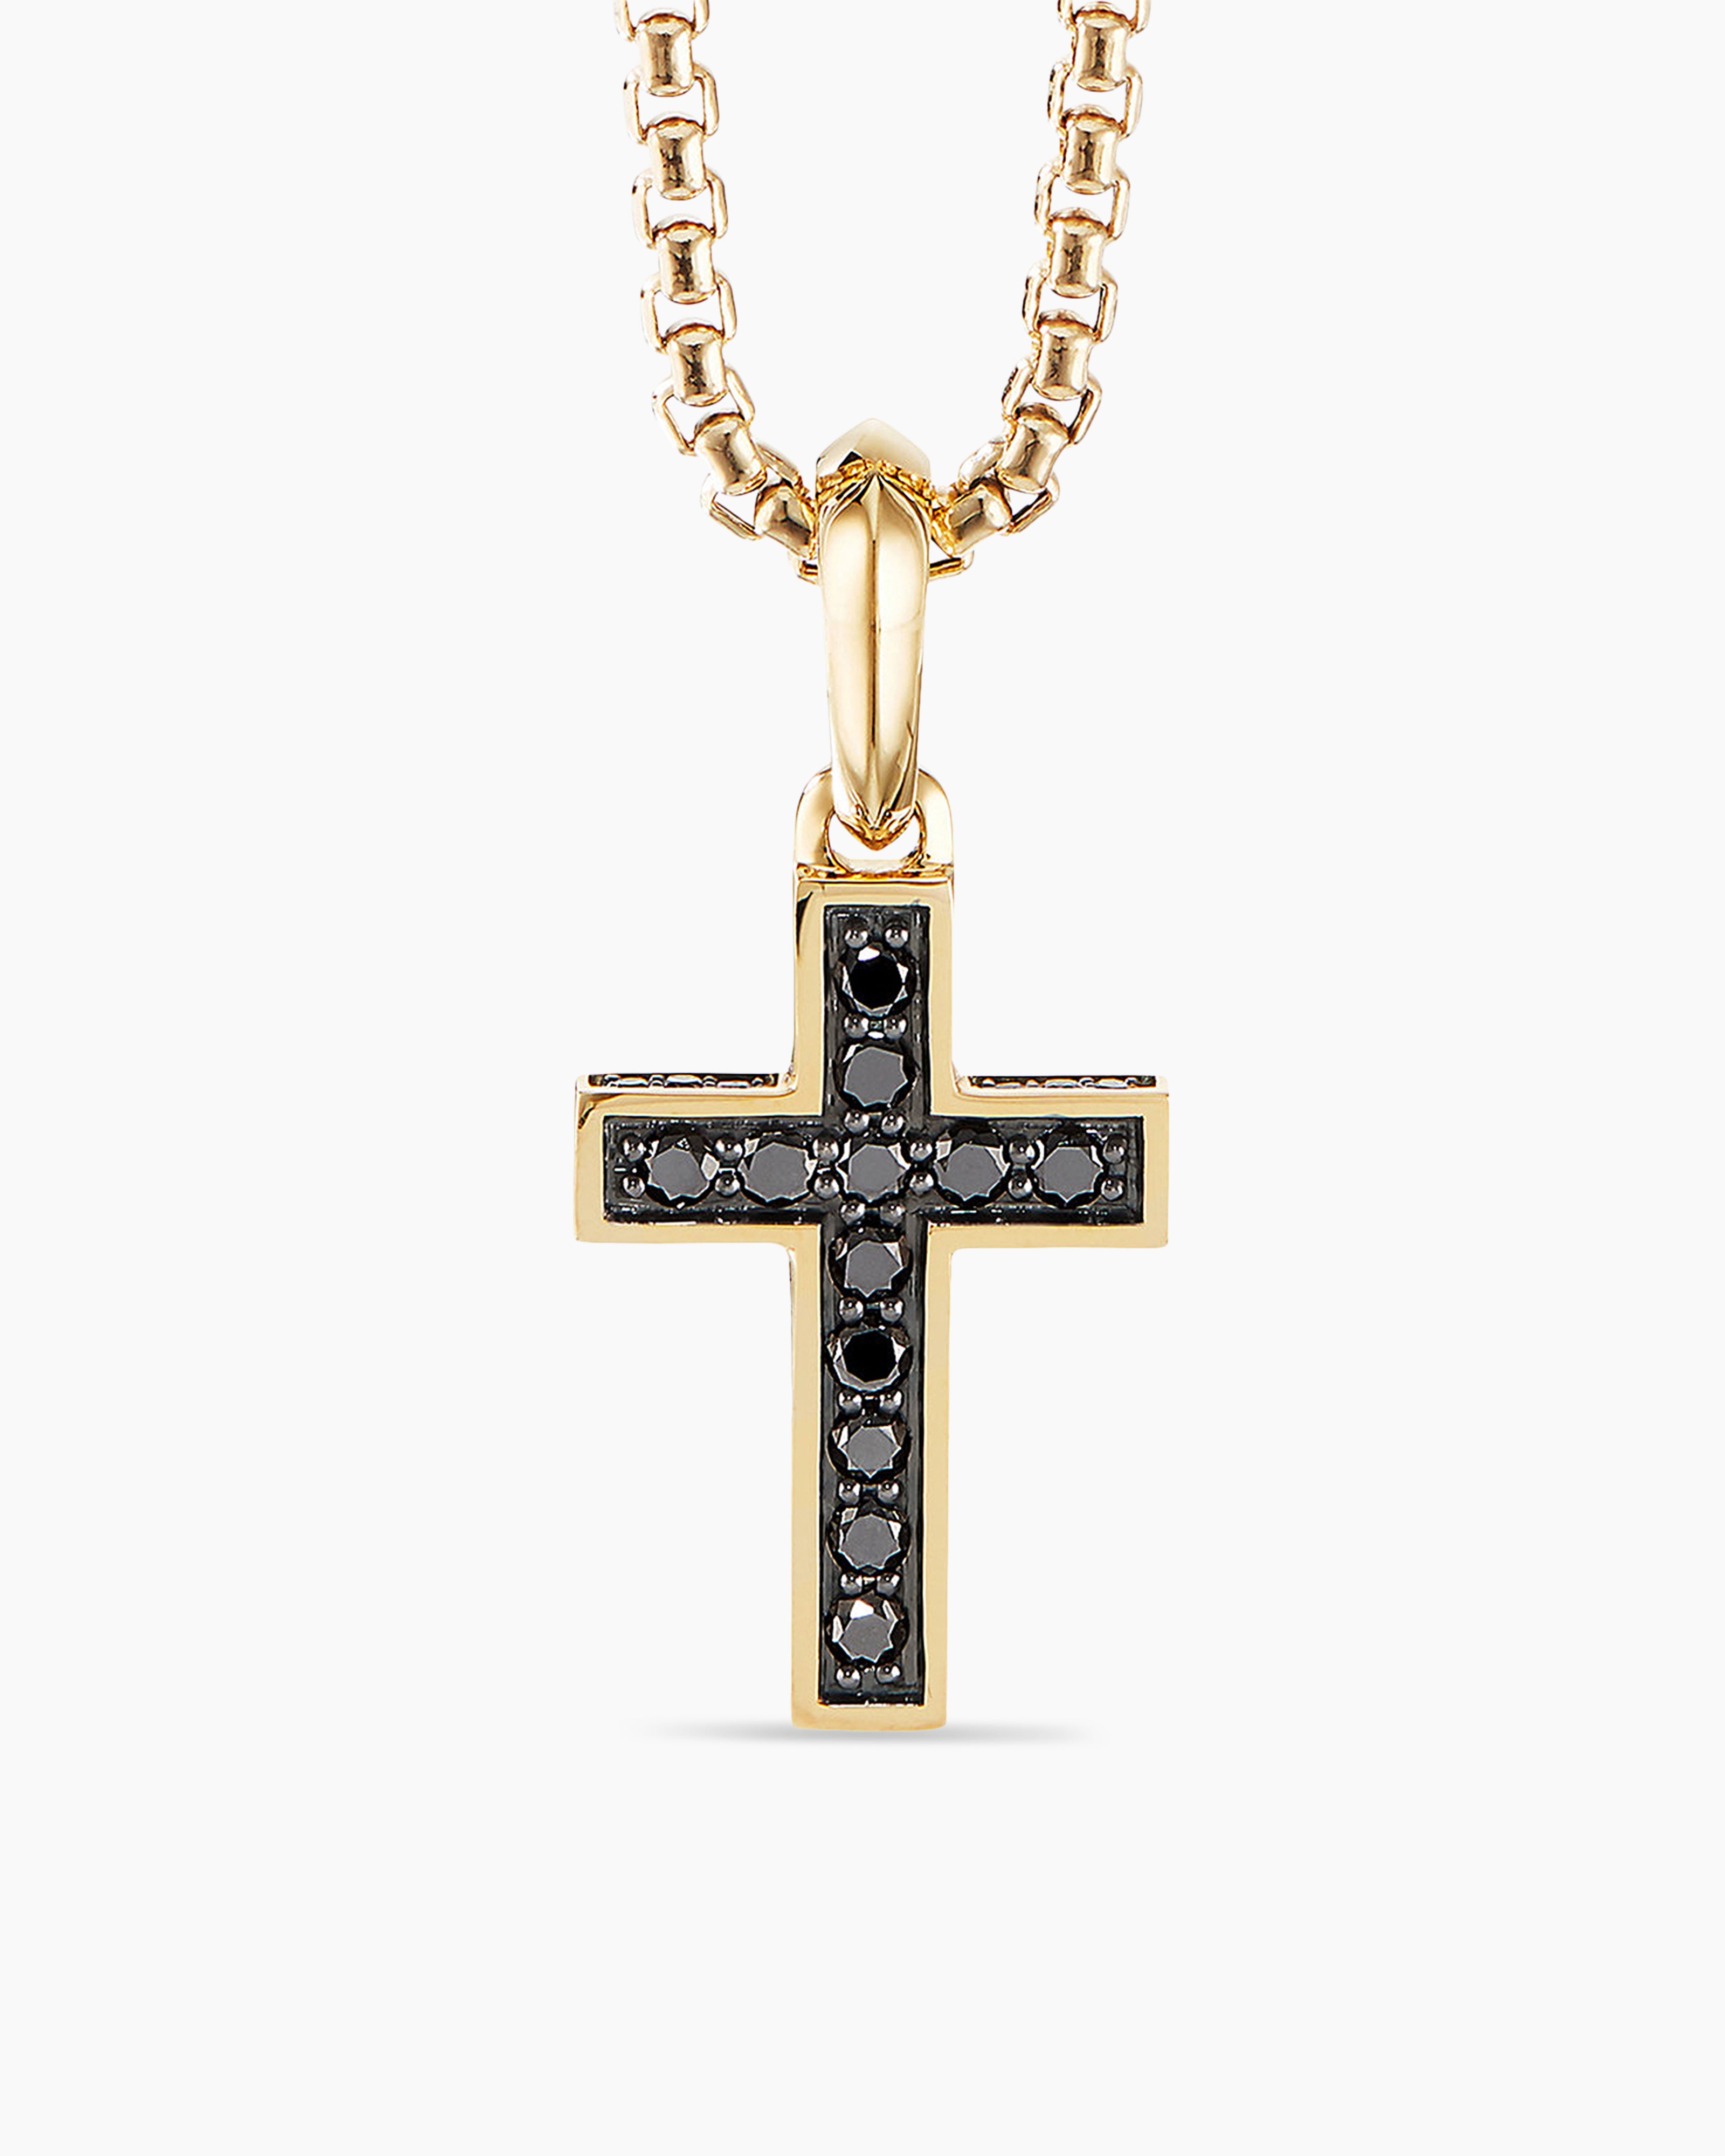 Gold Cross Pendant, 10K 14K 18K , Solid Italian Gold Cross Necklace,  Religious Jewelry , Birthday Gift Men Women, Baptism Baby Gift